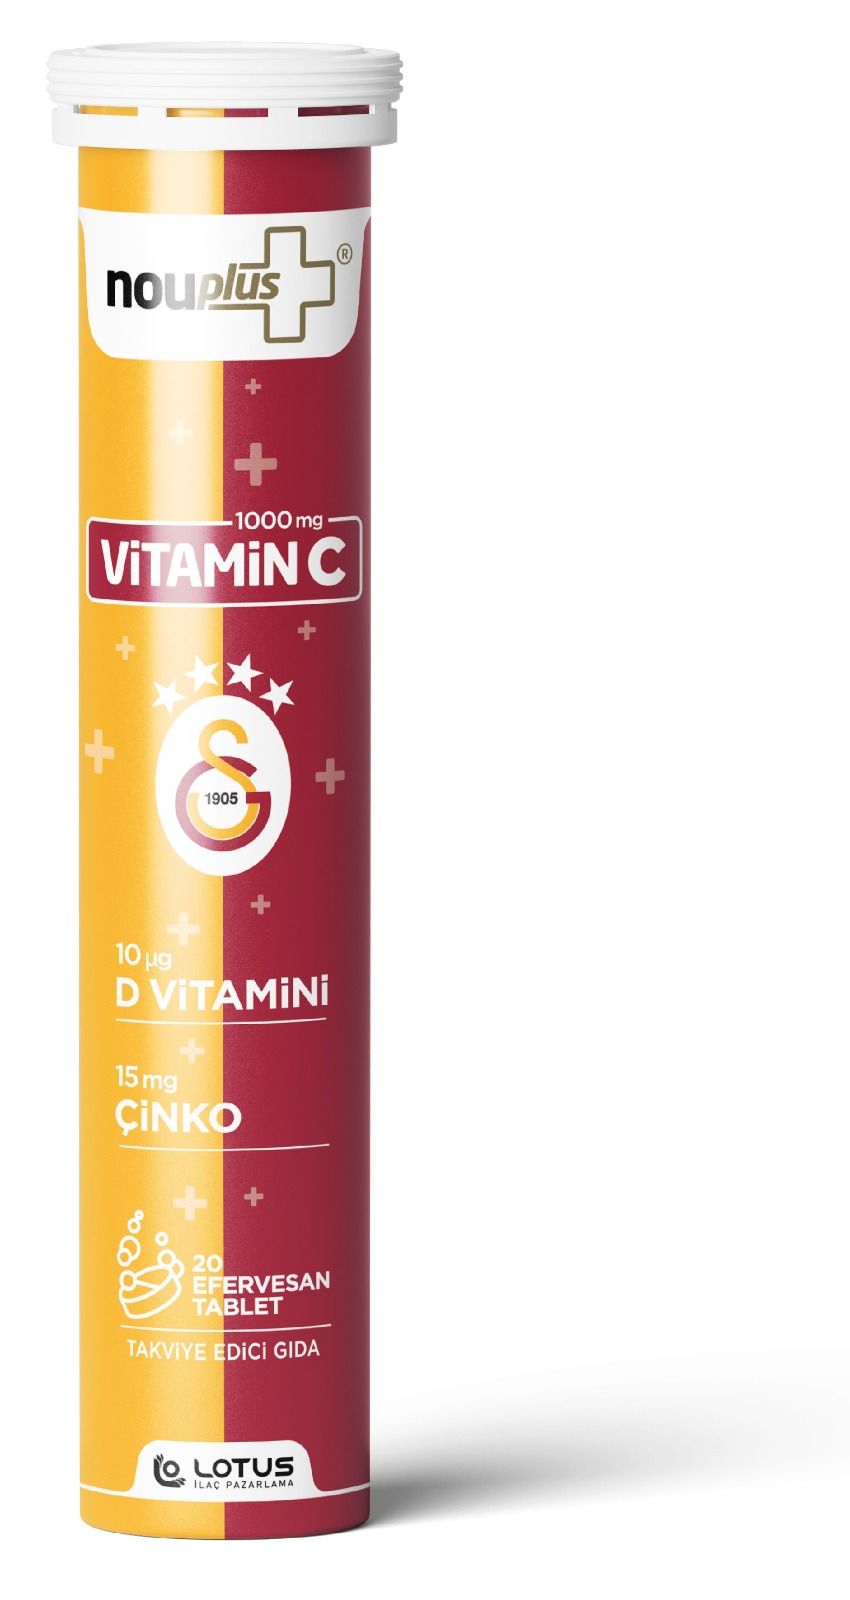 Gs Nouplus Vitamin C D Çinko 20 Efervesan Tablet